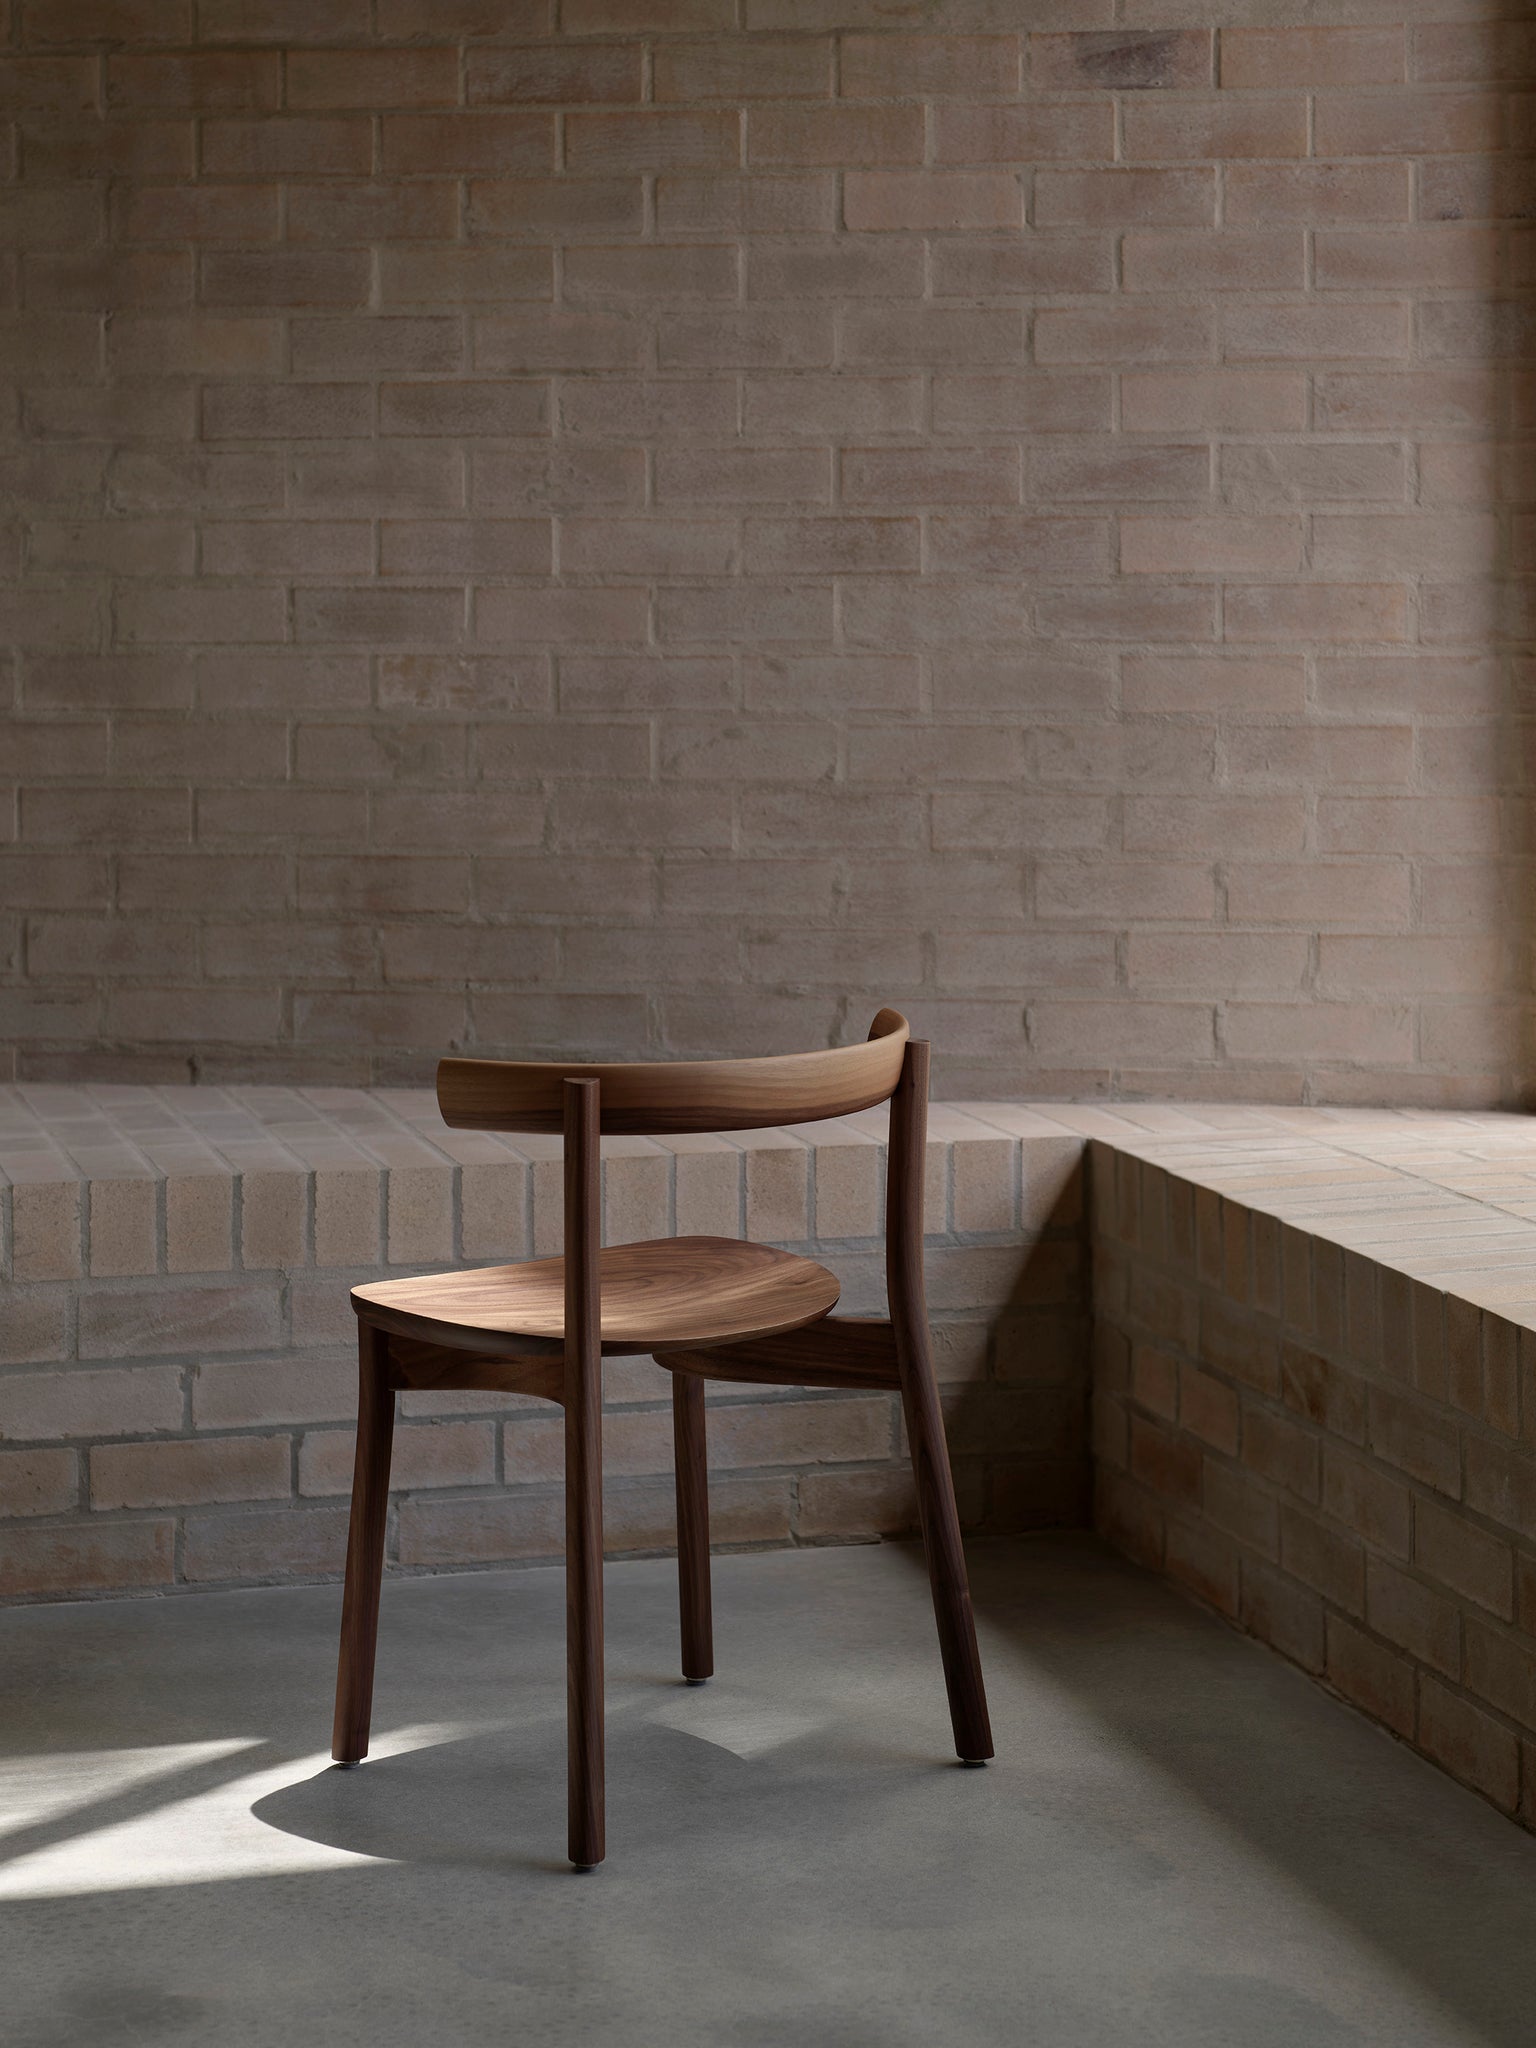 Torii chair in walnut with brick background